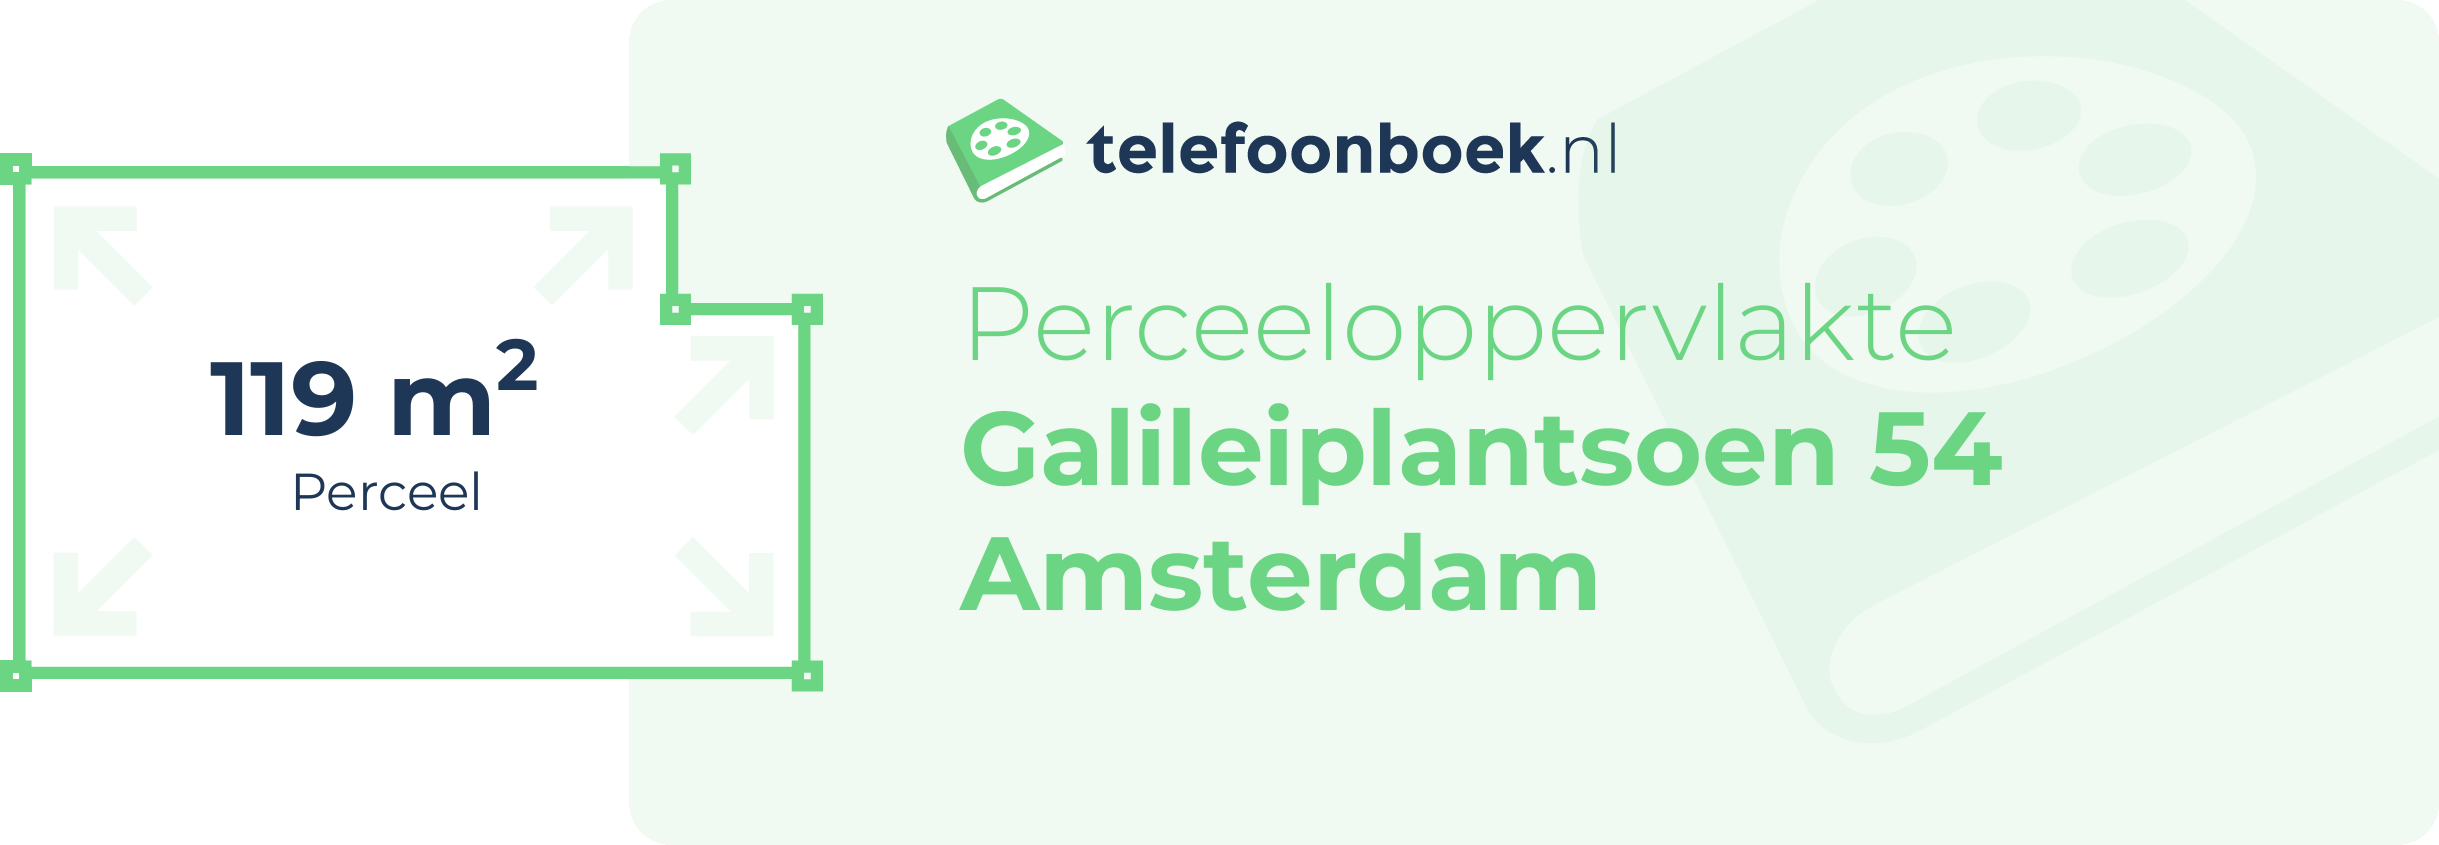 Perceeloppervlakte Galileiplantsoen 54 Amsterdam